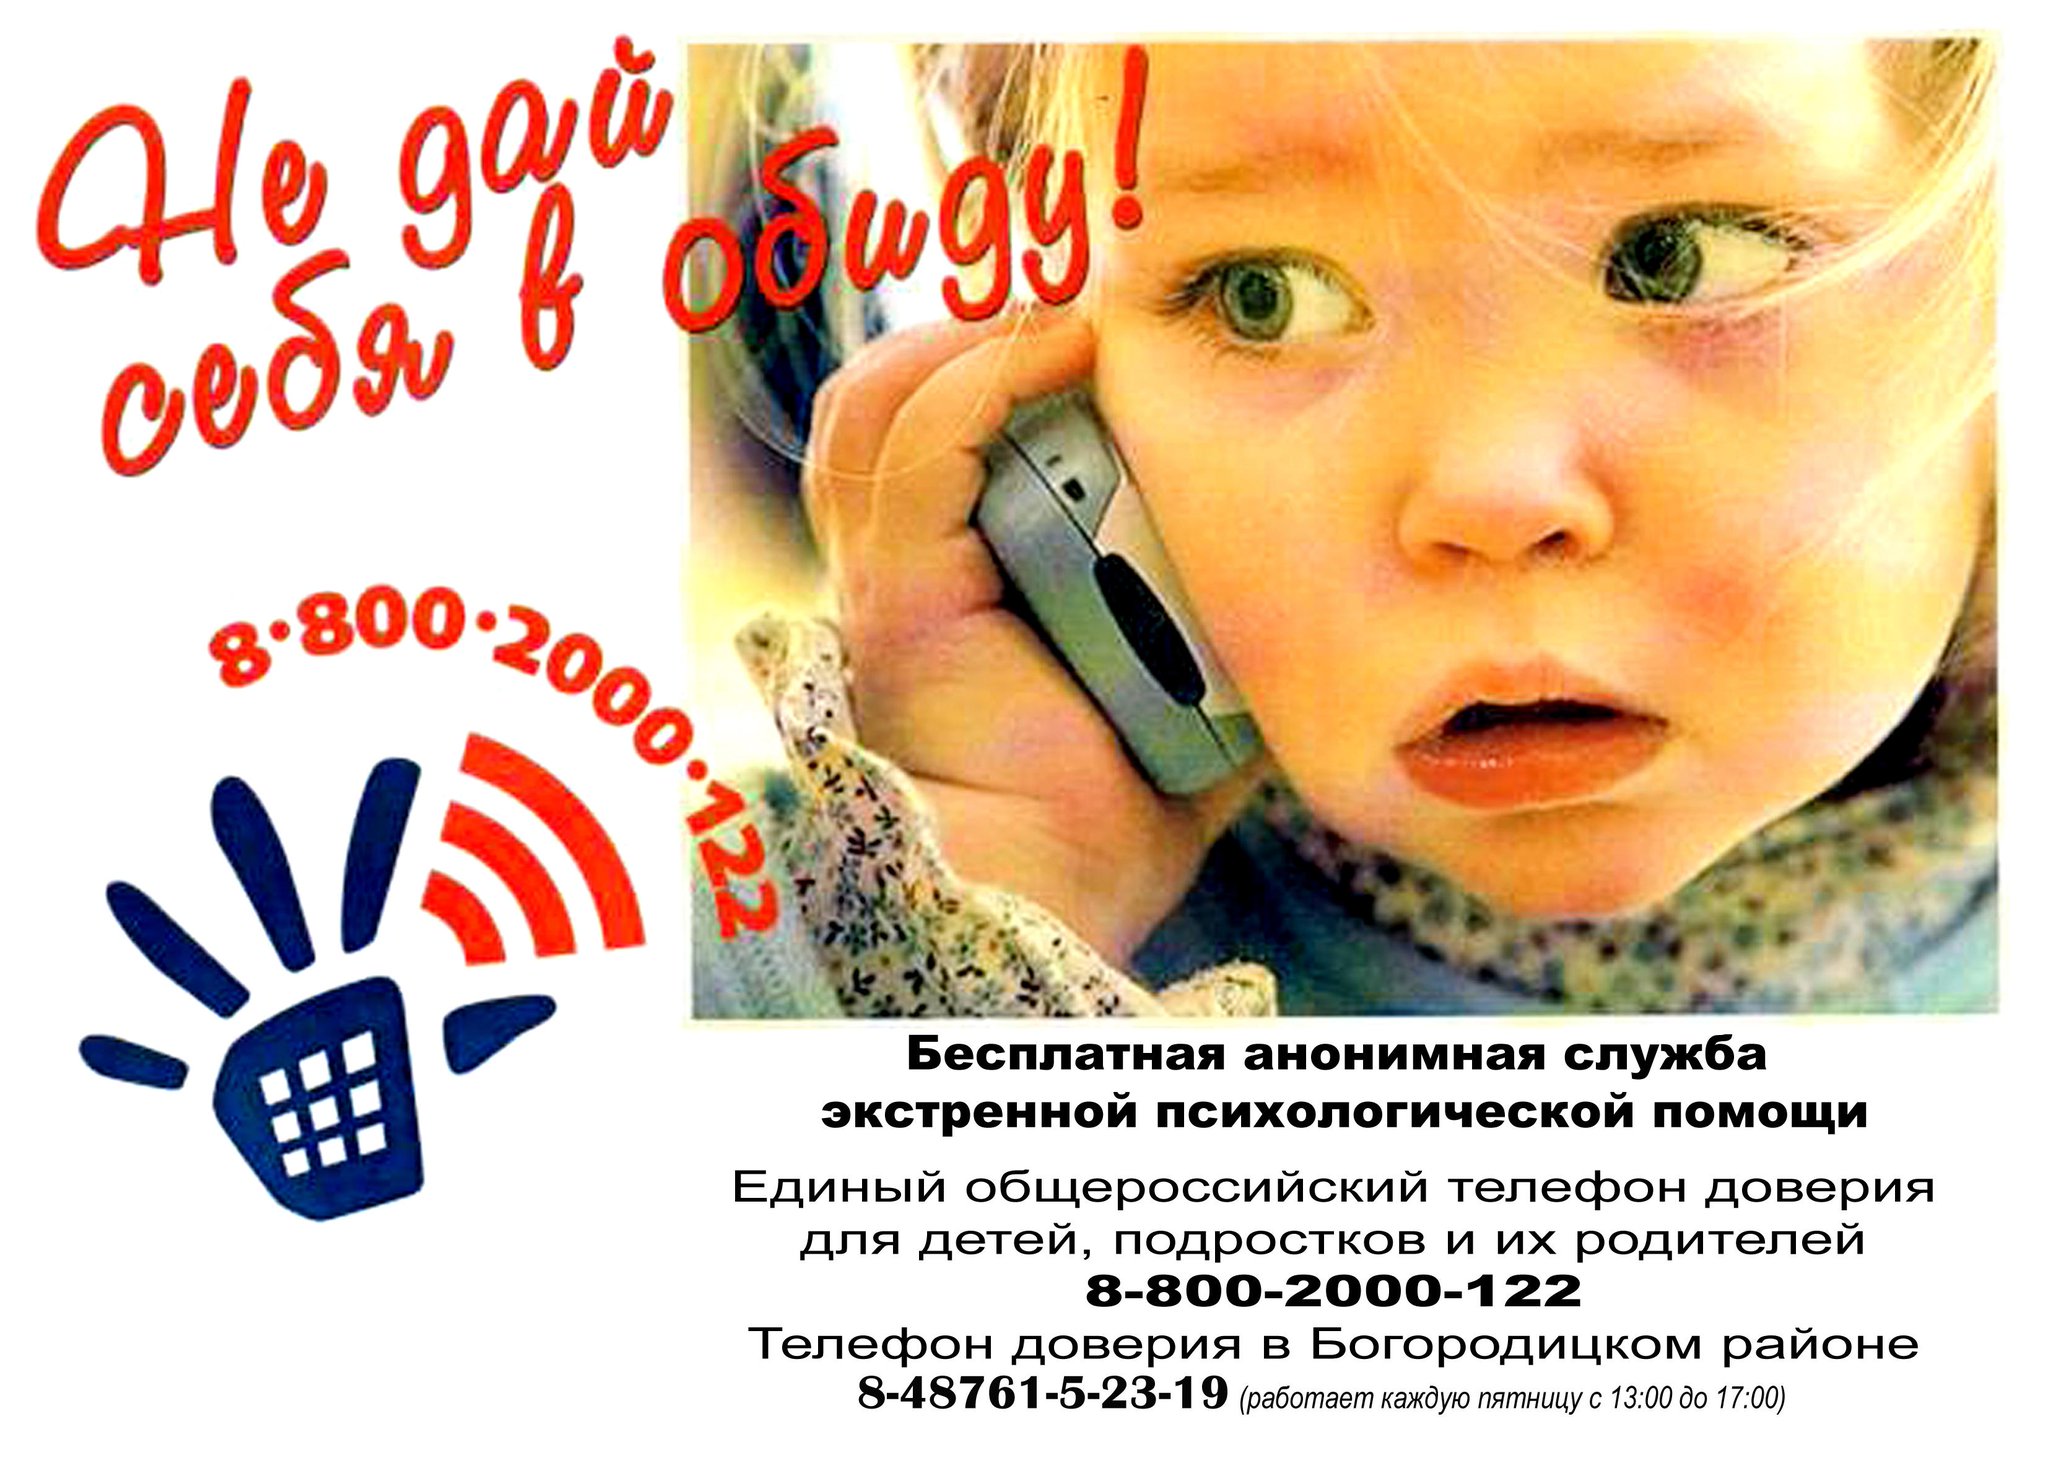 Беседа телефон доверия. Единый детский телефон доверия 8-800-2000-122. Телефон доверия. Телефон доверия для детей. Детские телефоны доверия.